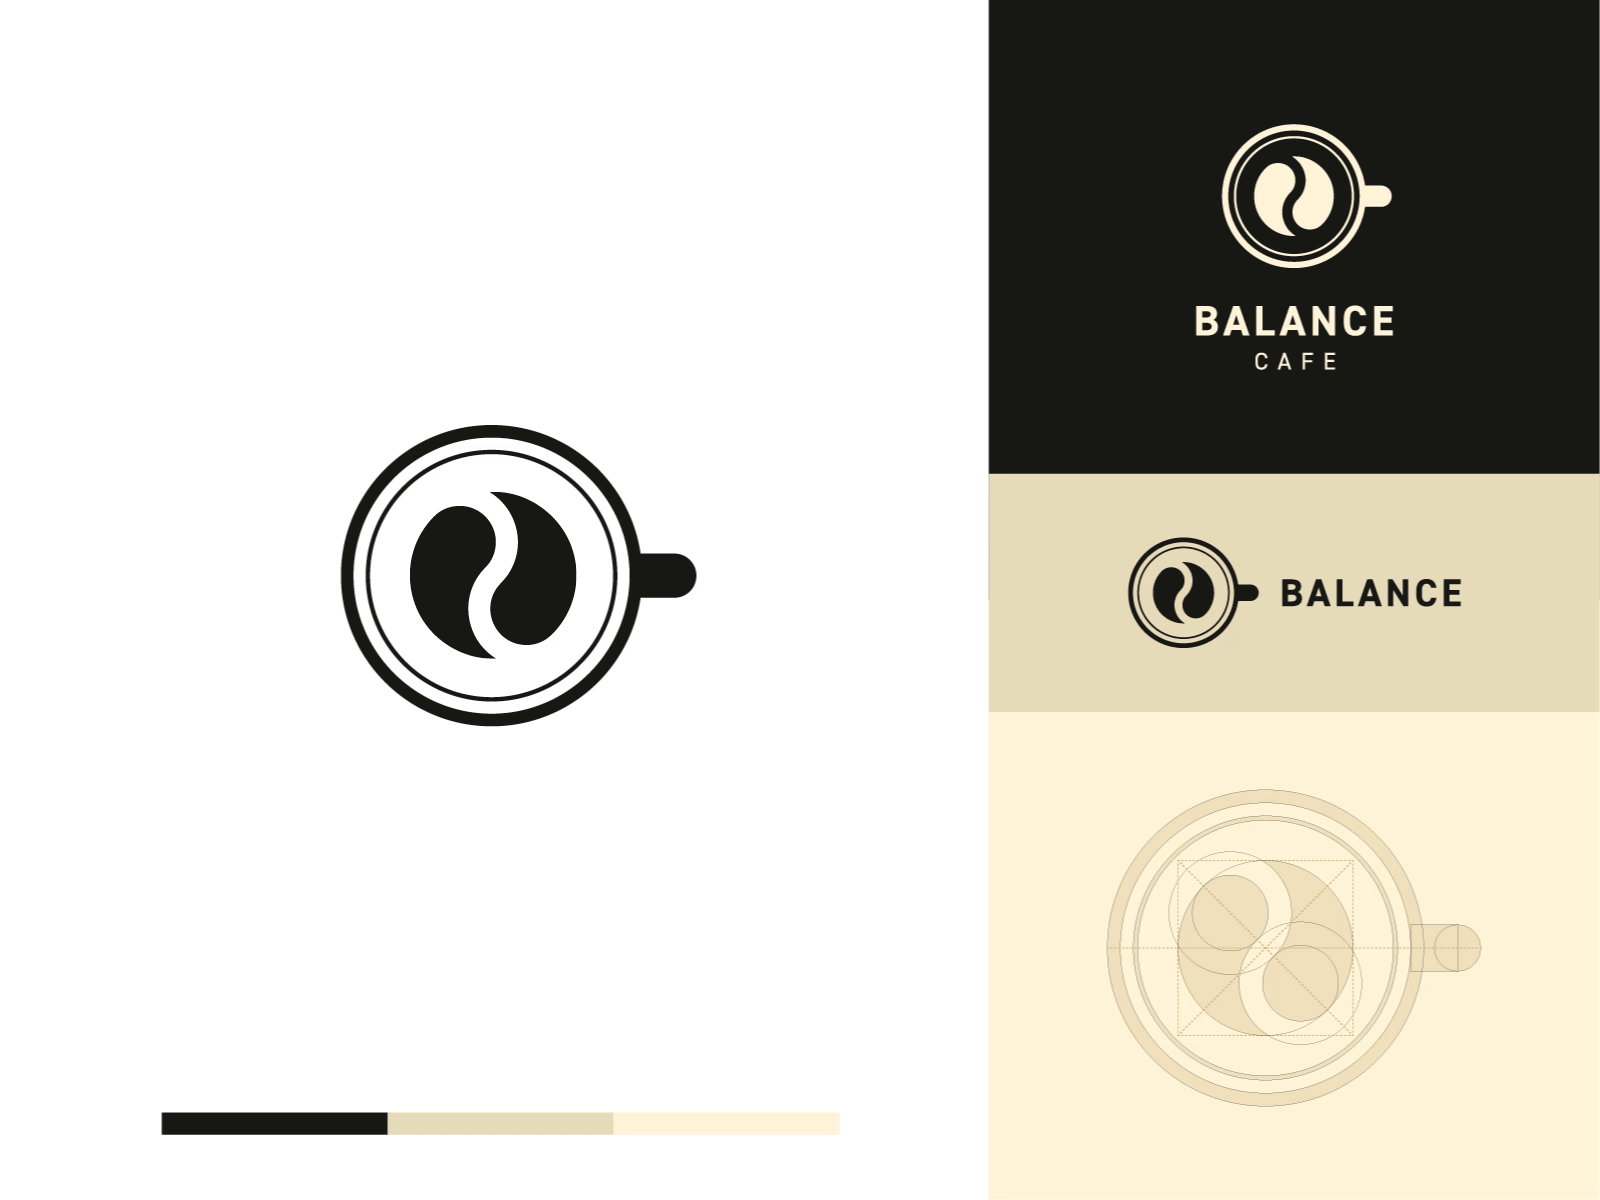 Balance Cafe logo brand brand identity branding branding concept branding design cafe cafe branding logo logos logotype visual identity